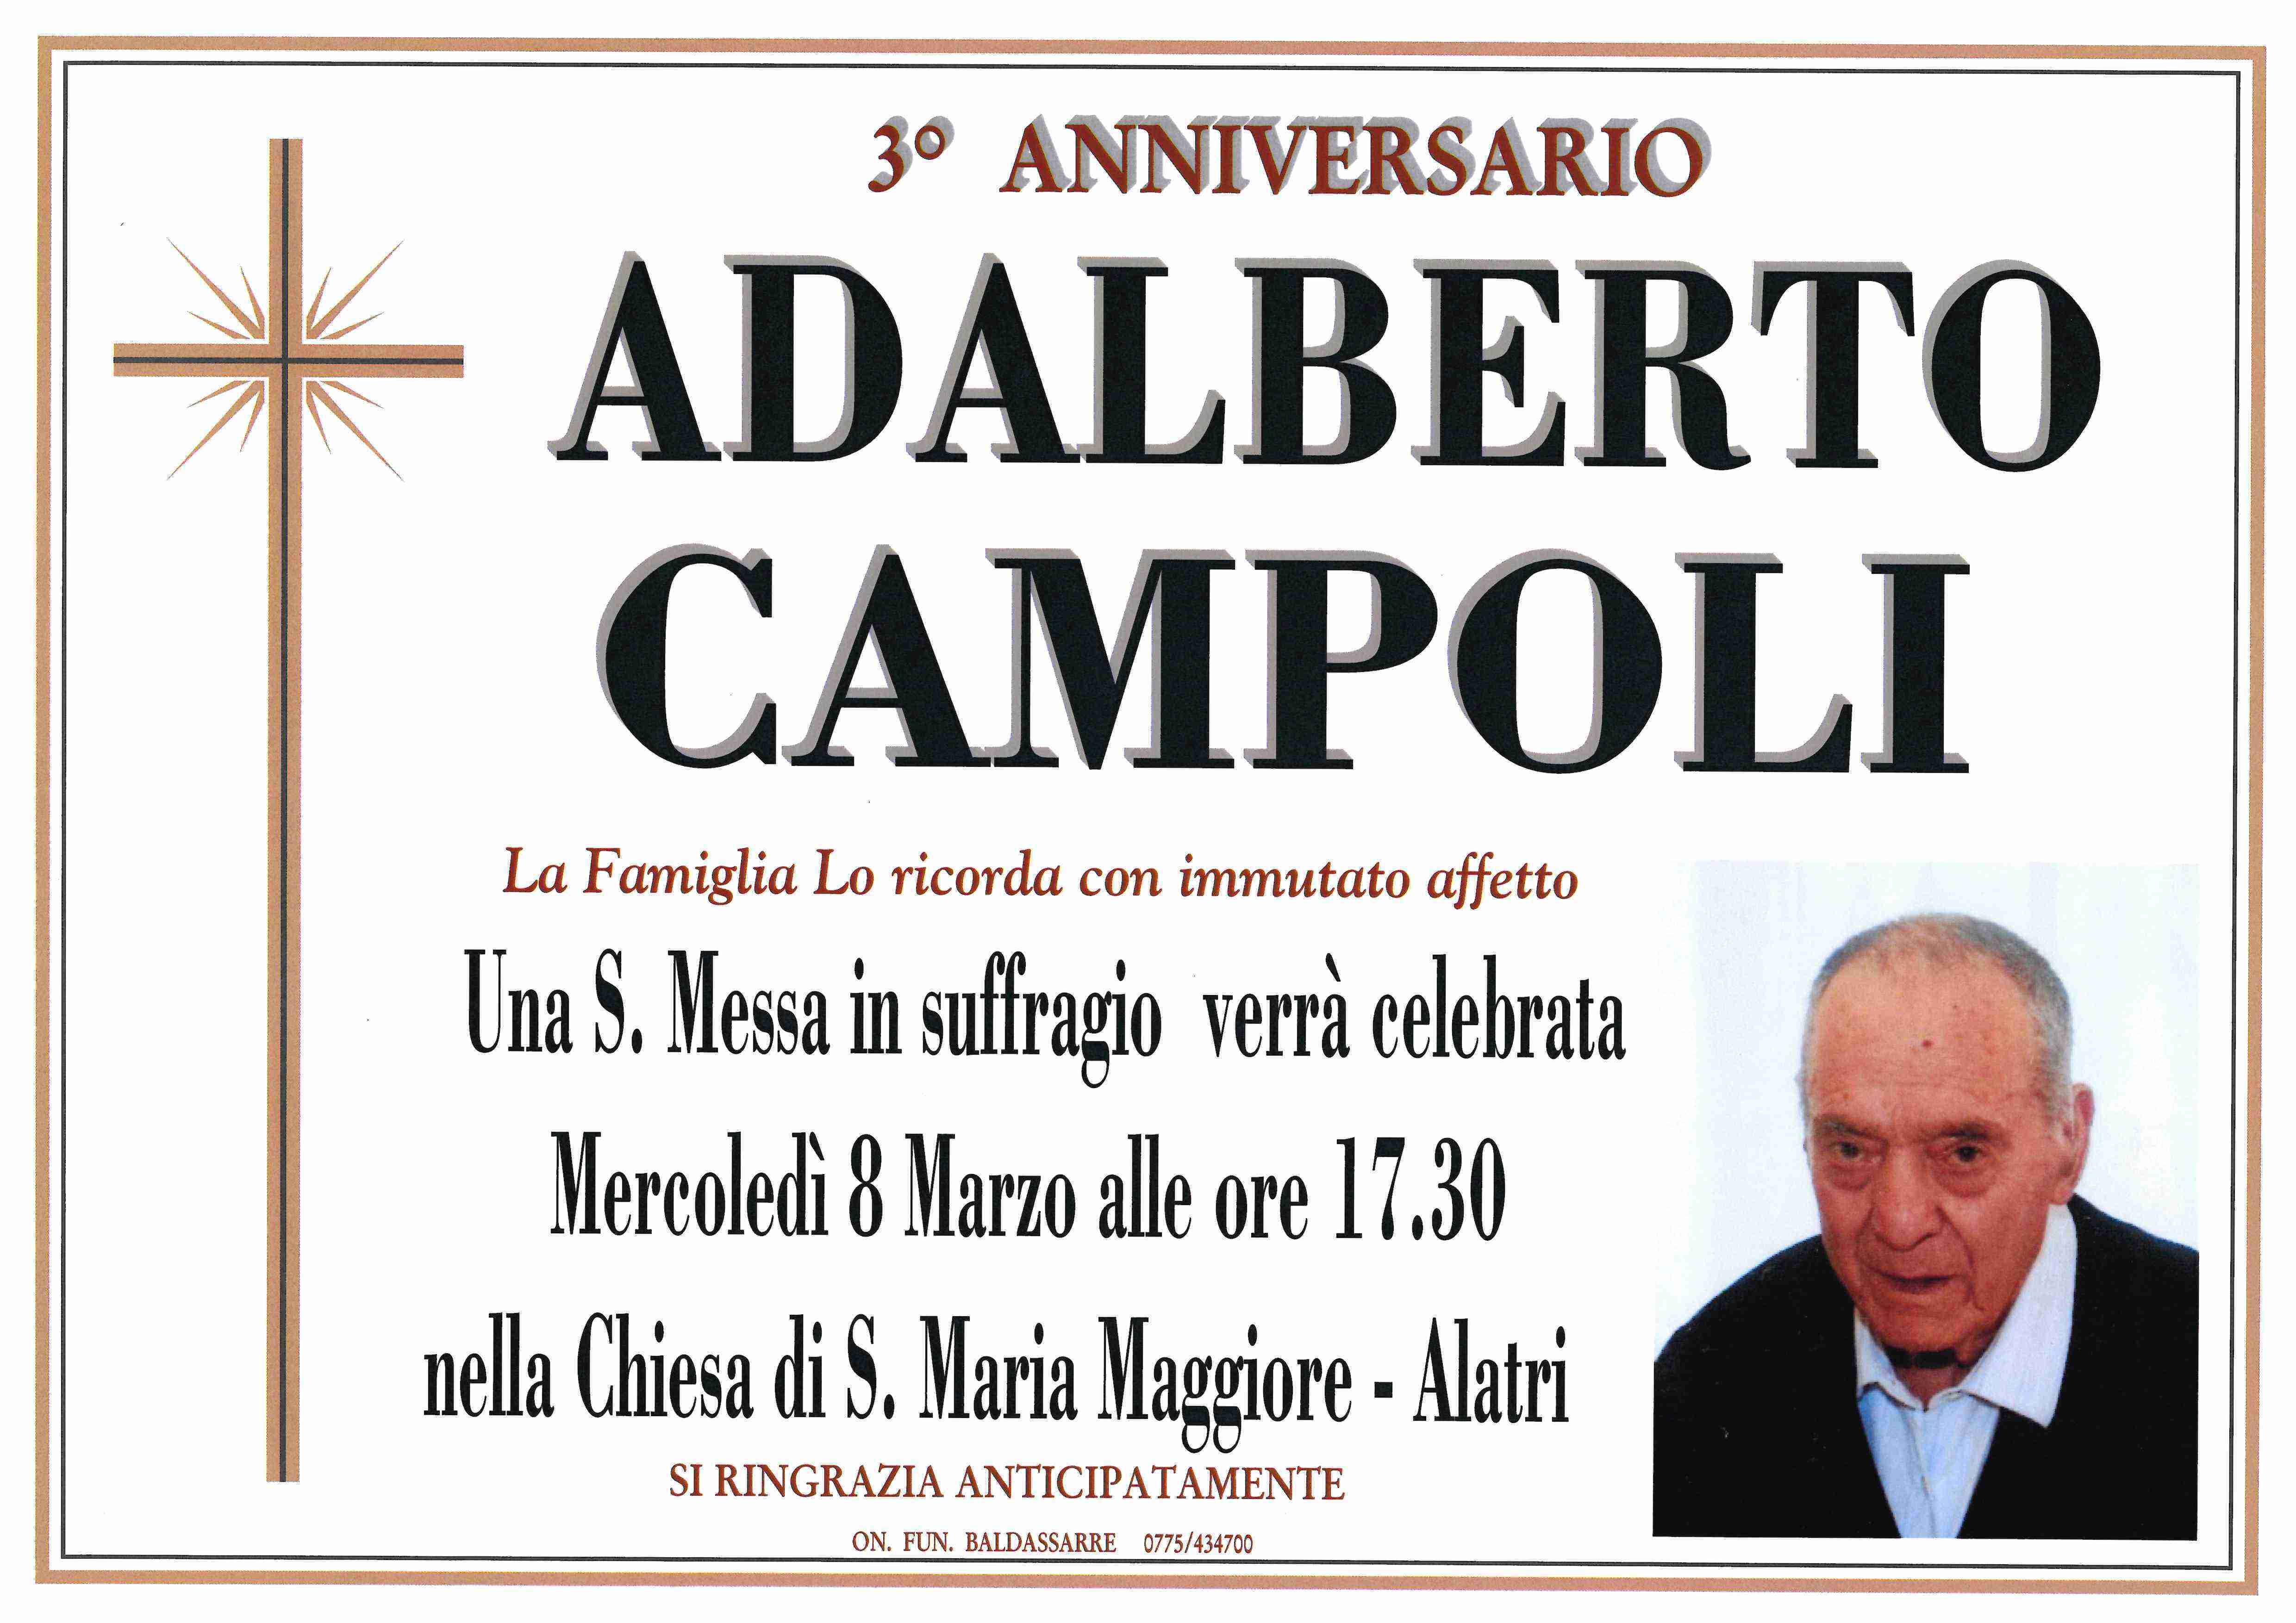 Campoli Adalberto